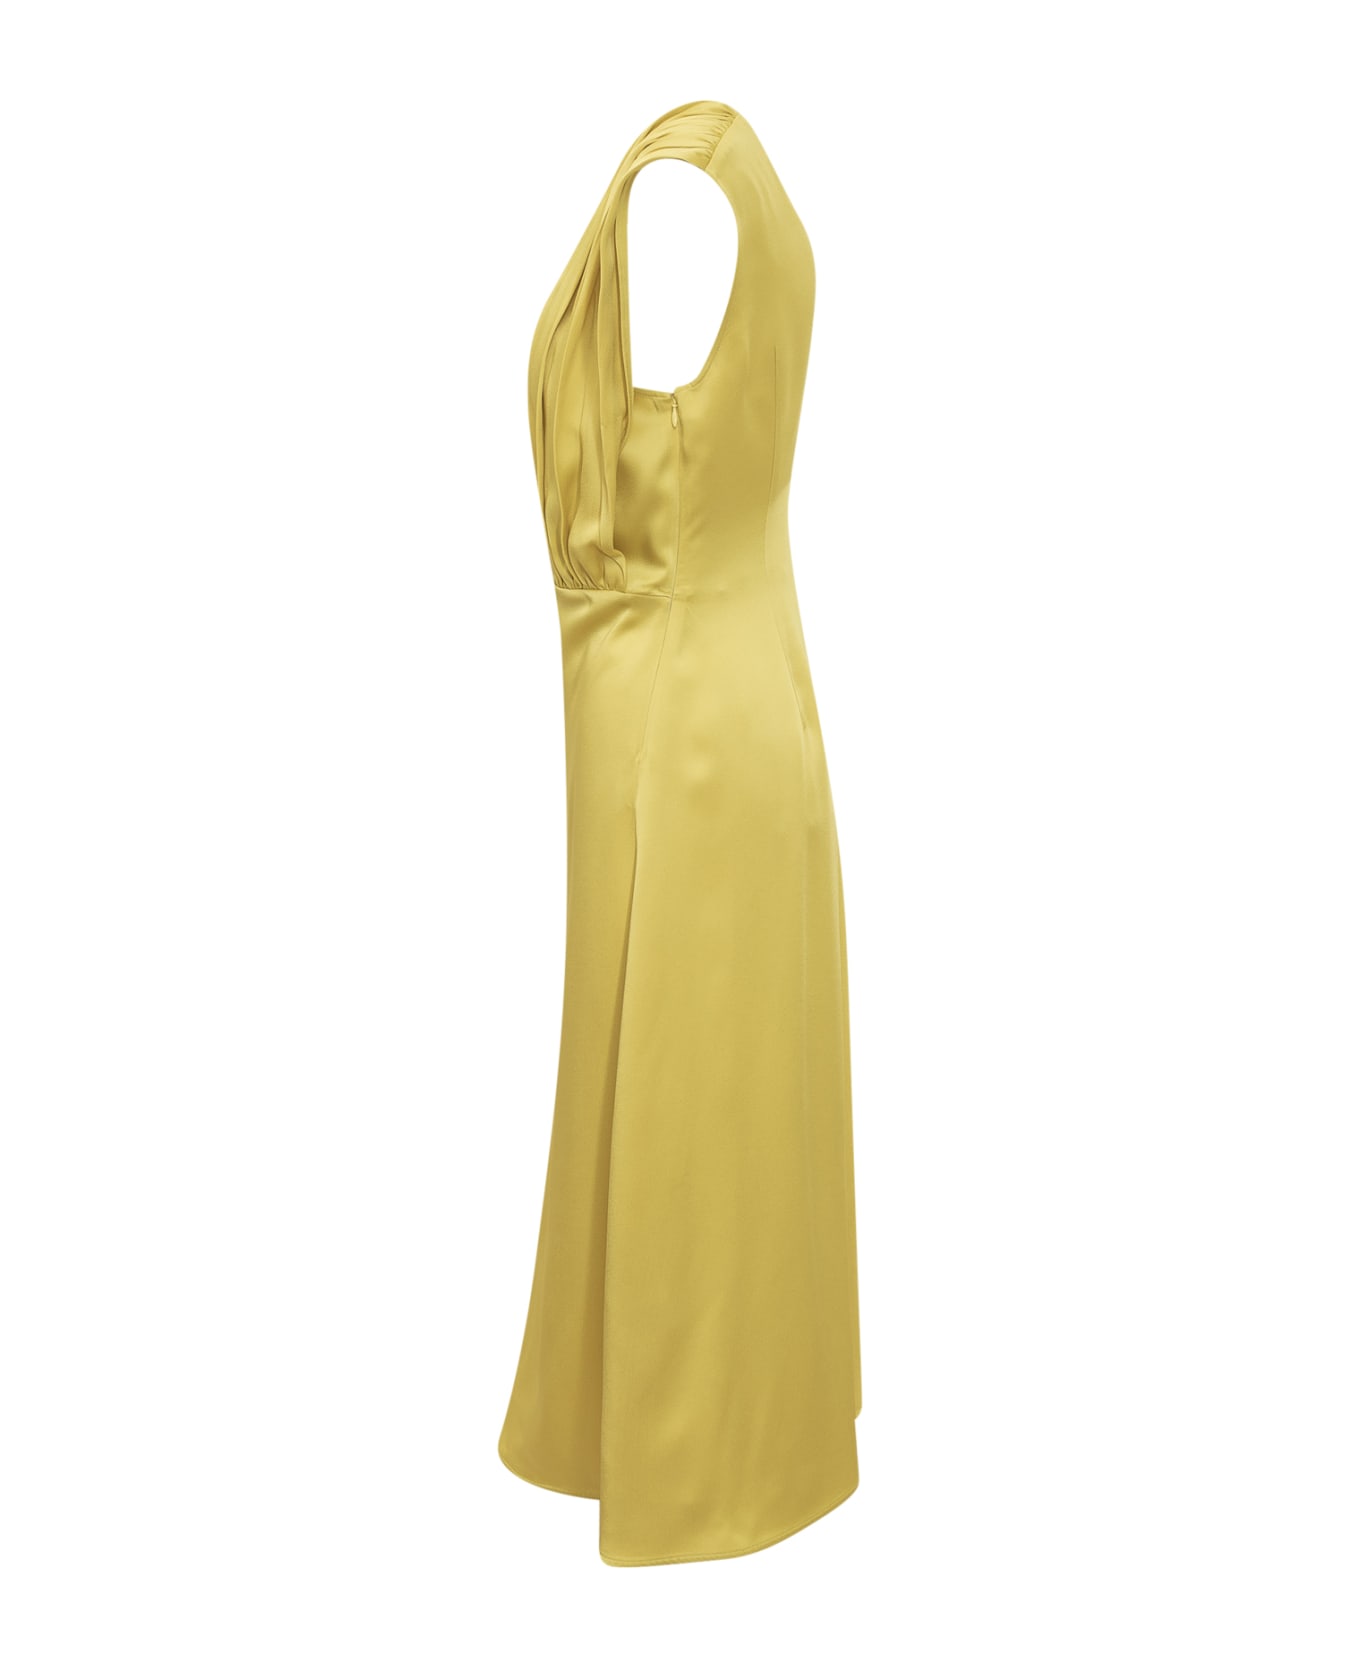 Jil Sander Dress - Yellow